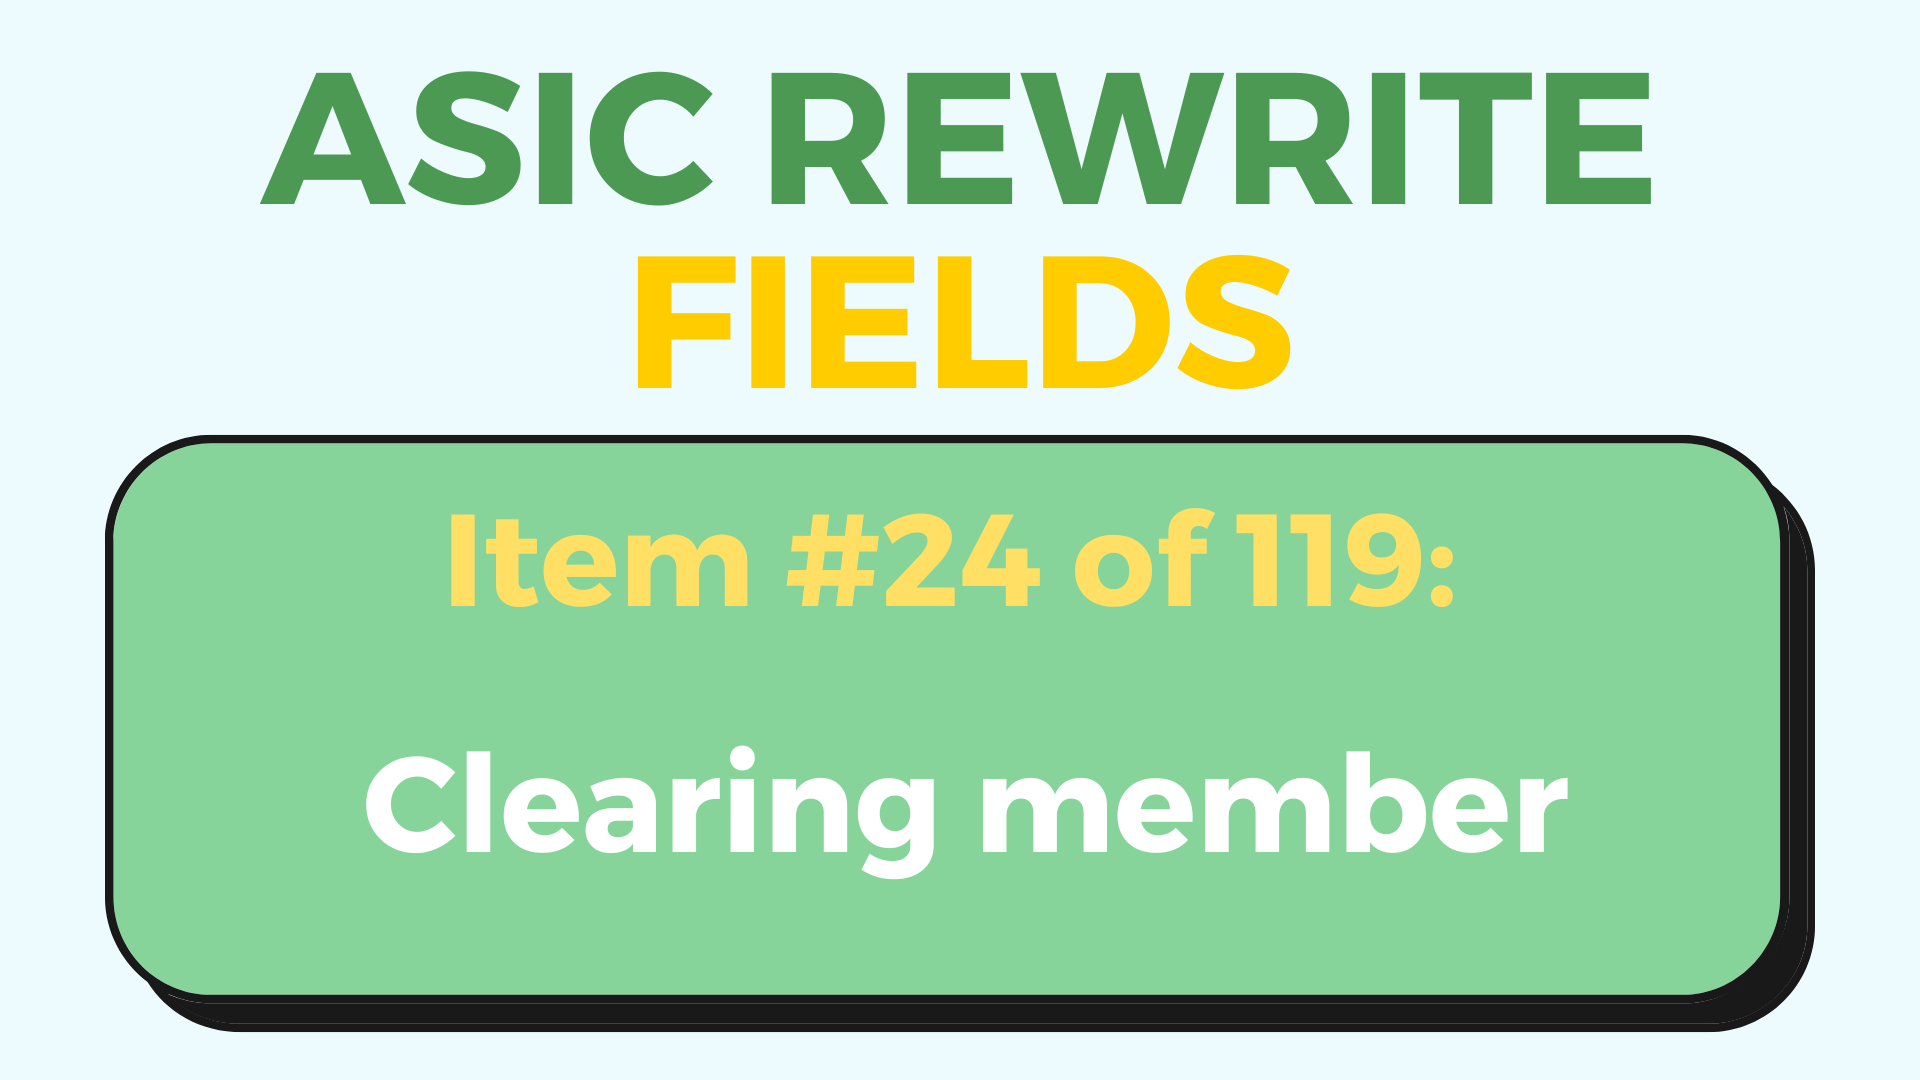 Clearing member - ASIC rewrite